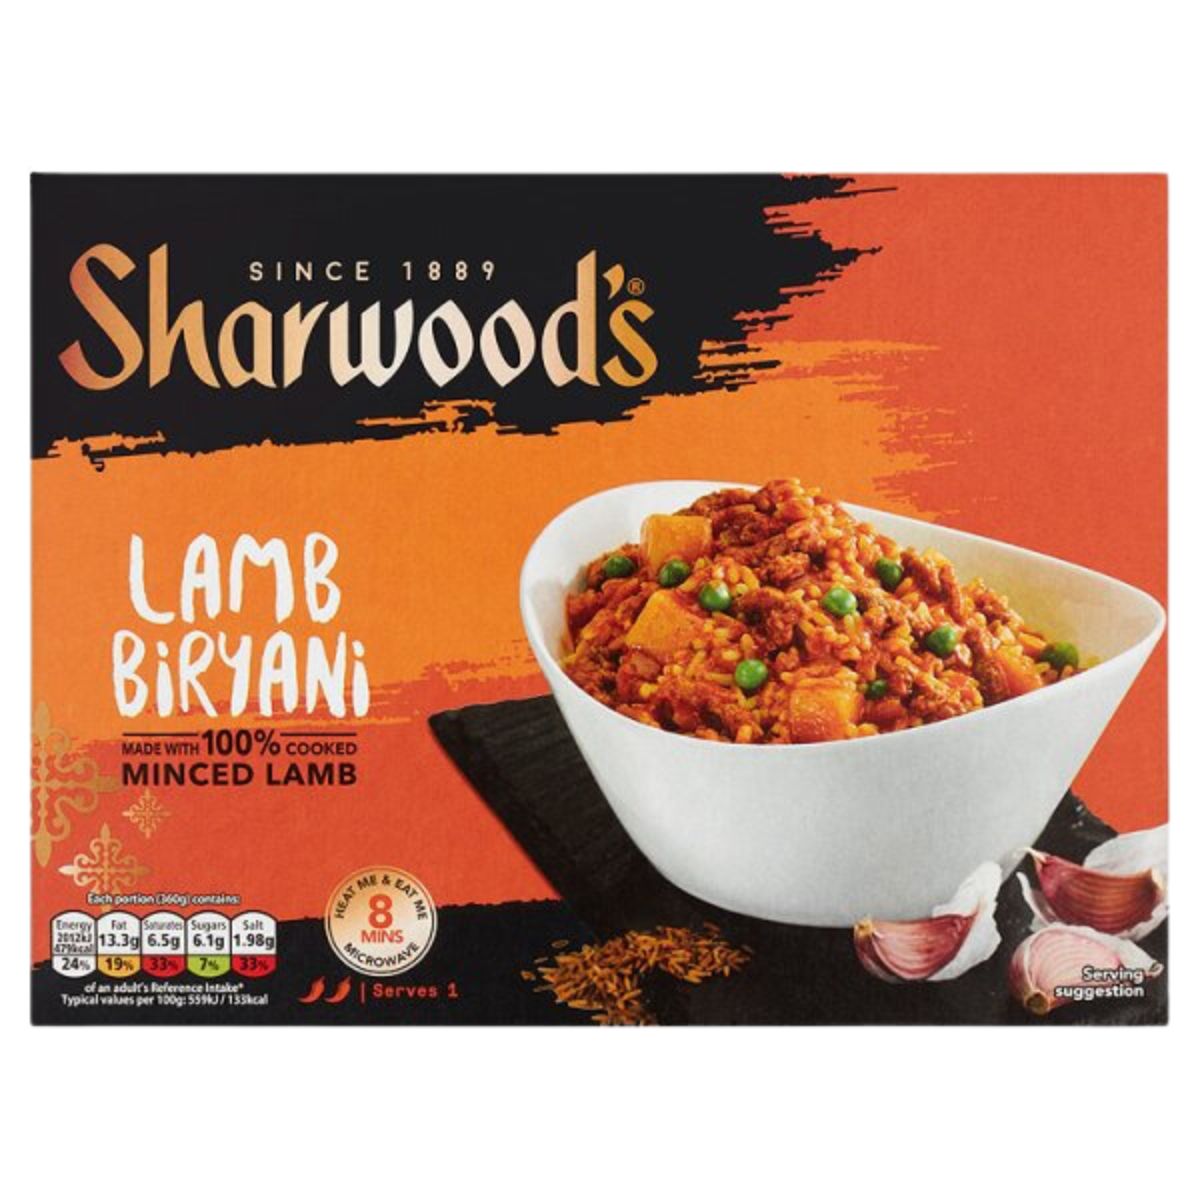 A box of Sharwoods - Lamb Biryani Rice with Minced Lamb and Potatoes - 375g.